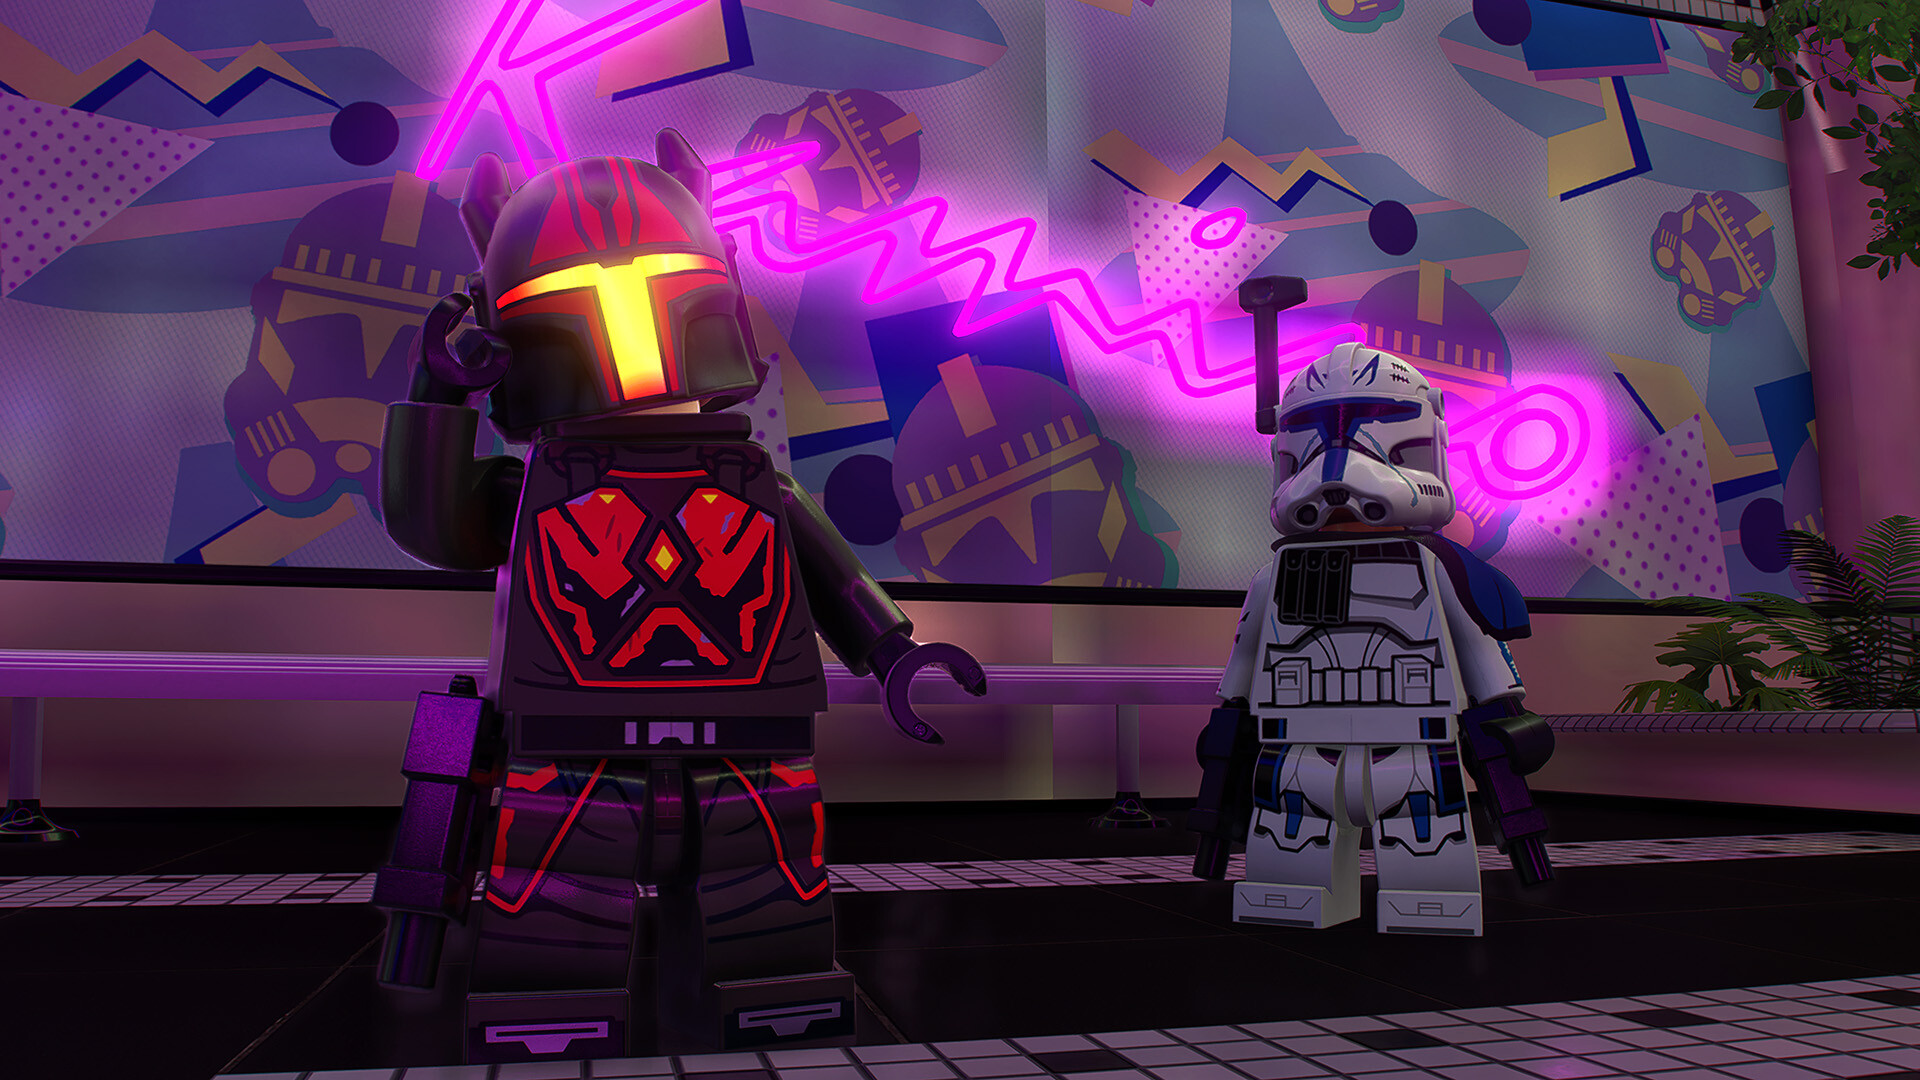 Comprar LEGO Star Wars: The Skywalker Saga Deluxe Edition Steam